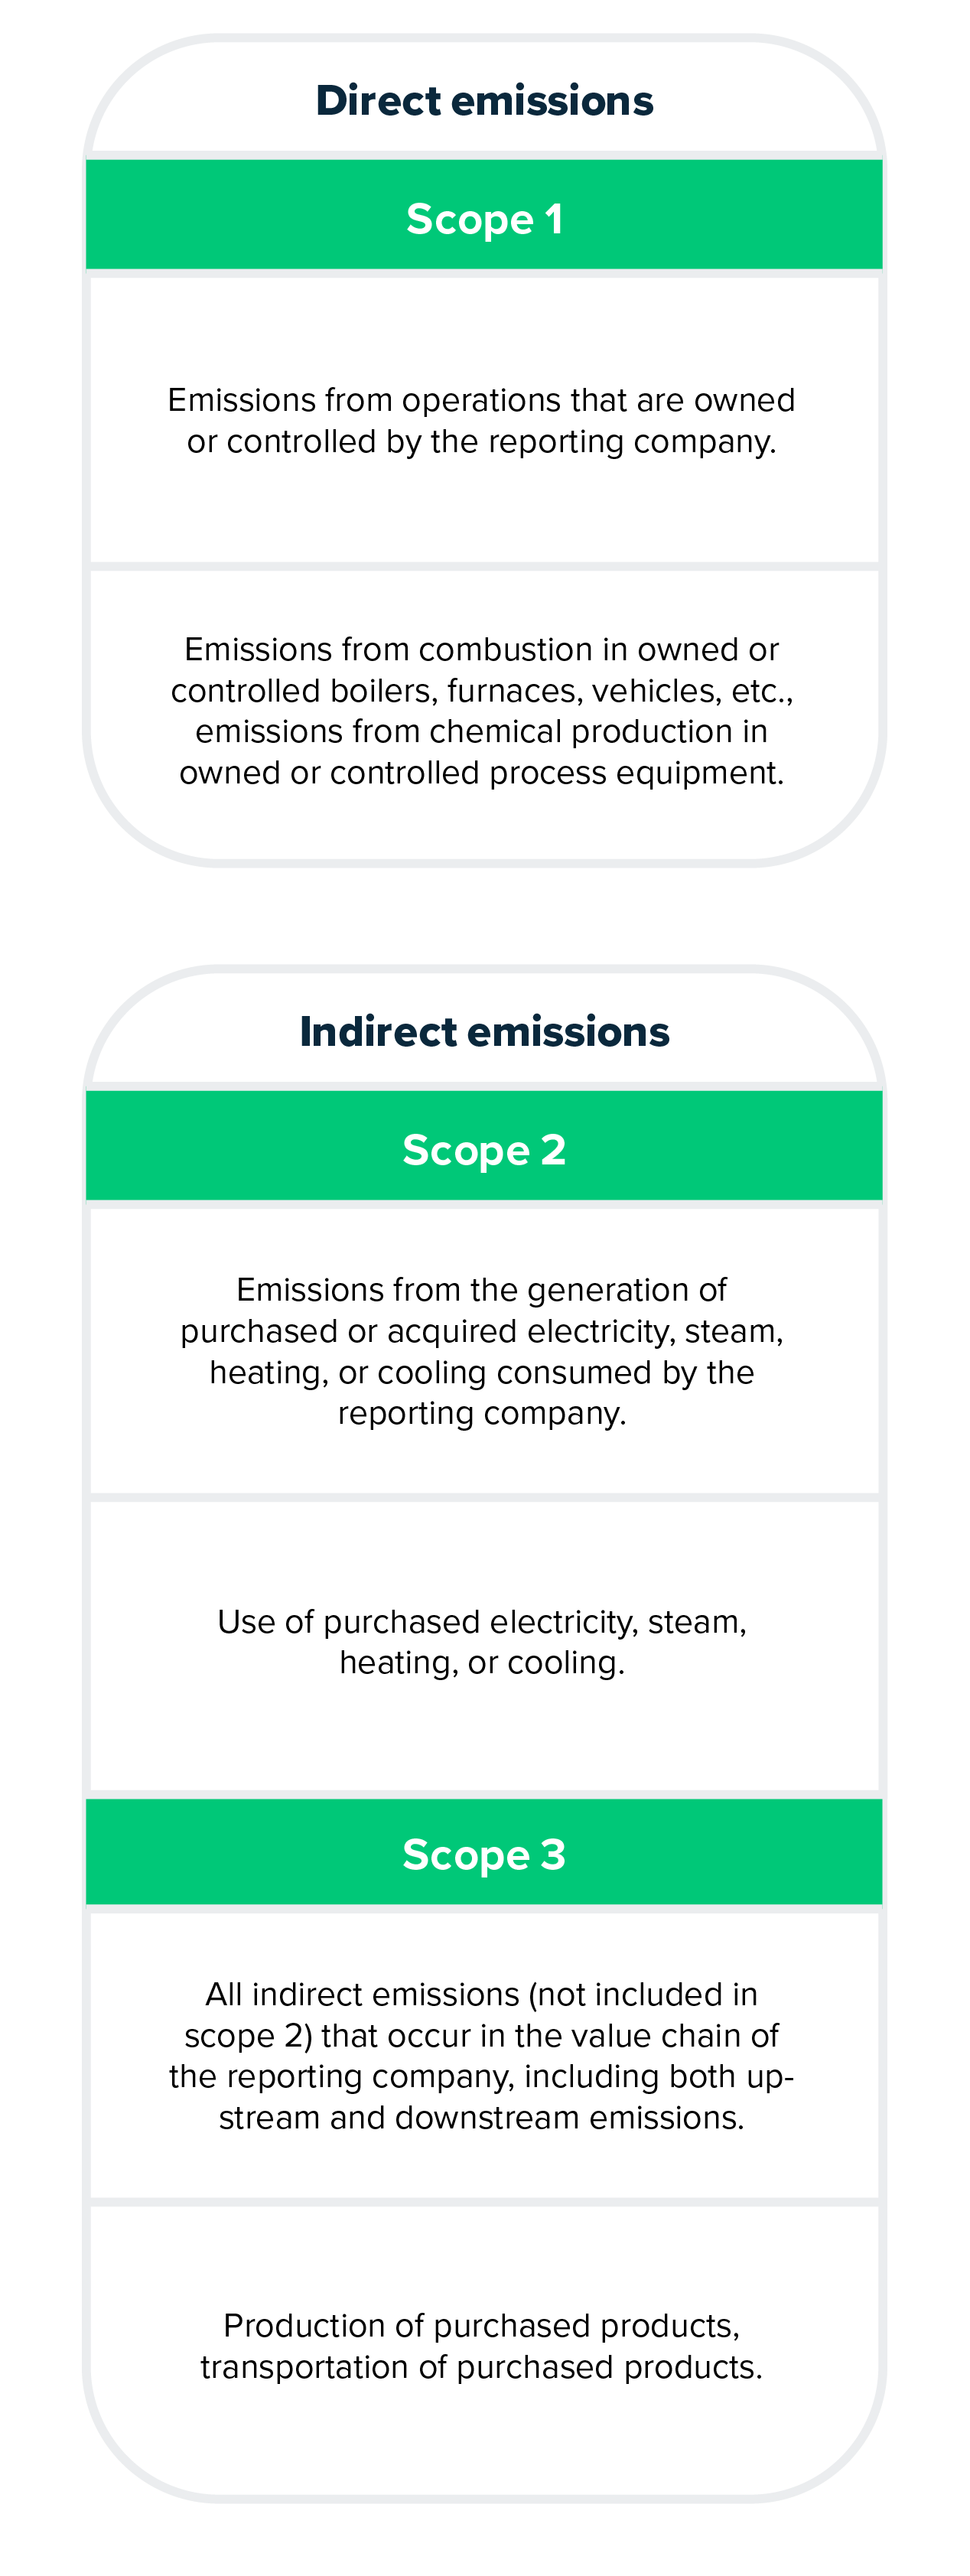 Scope 3 emissions